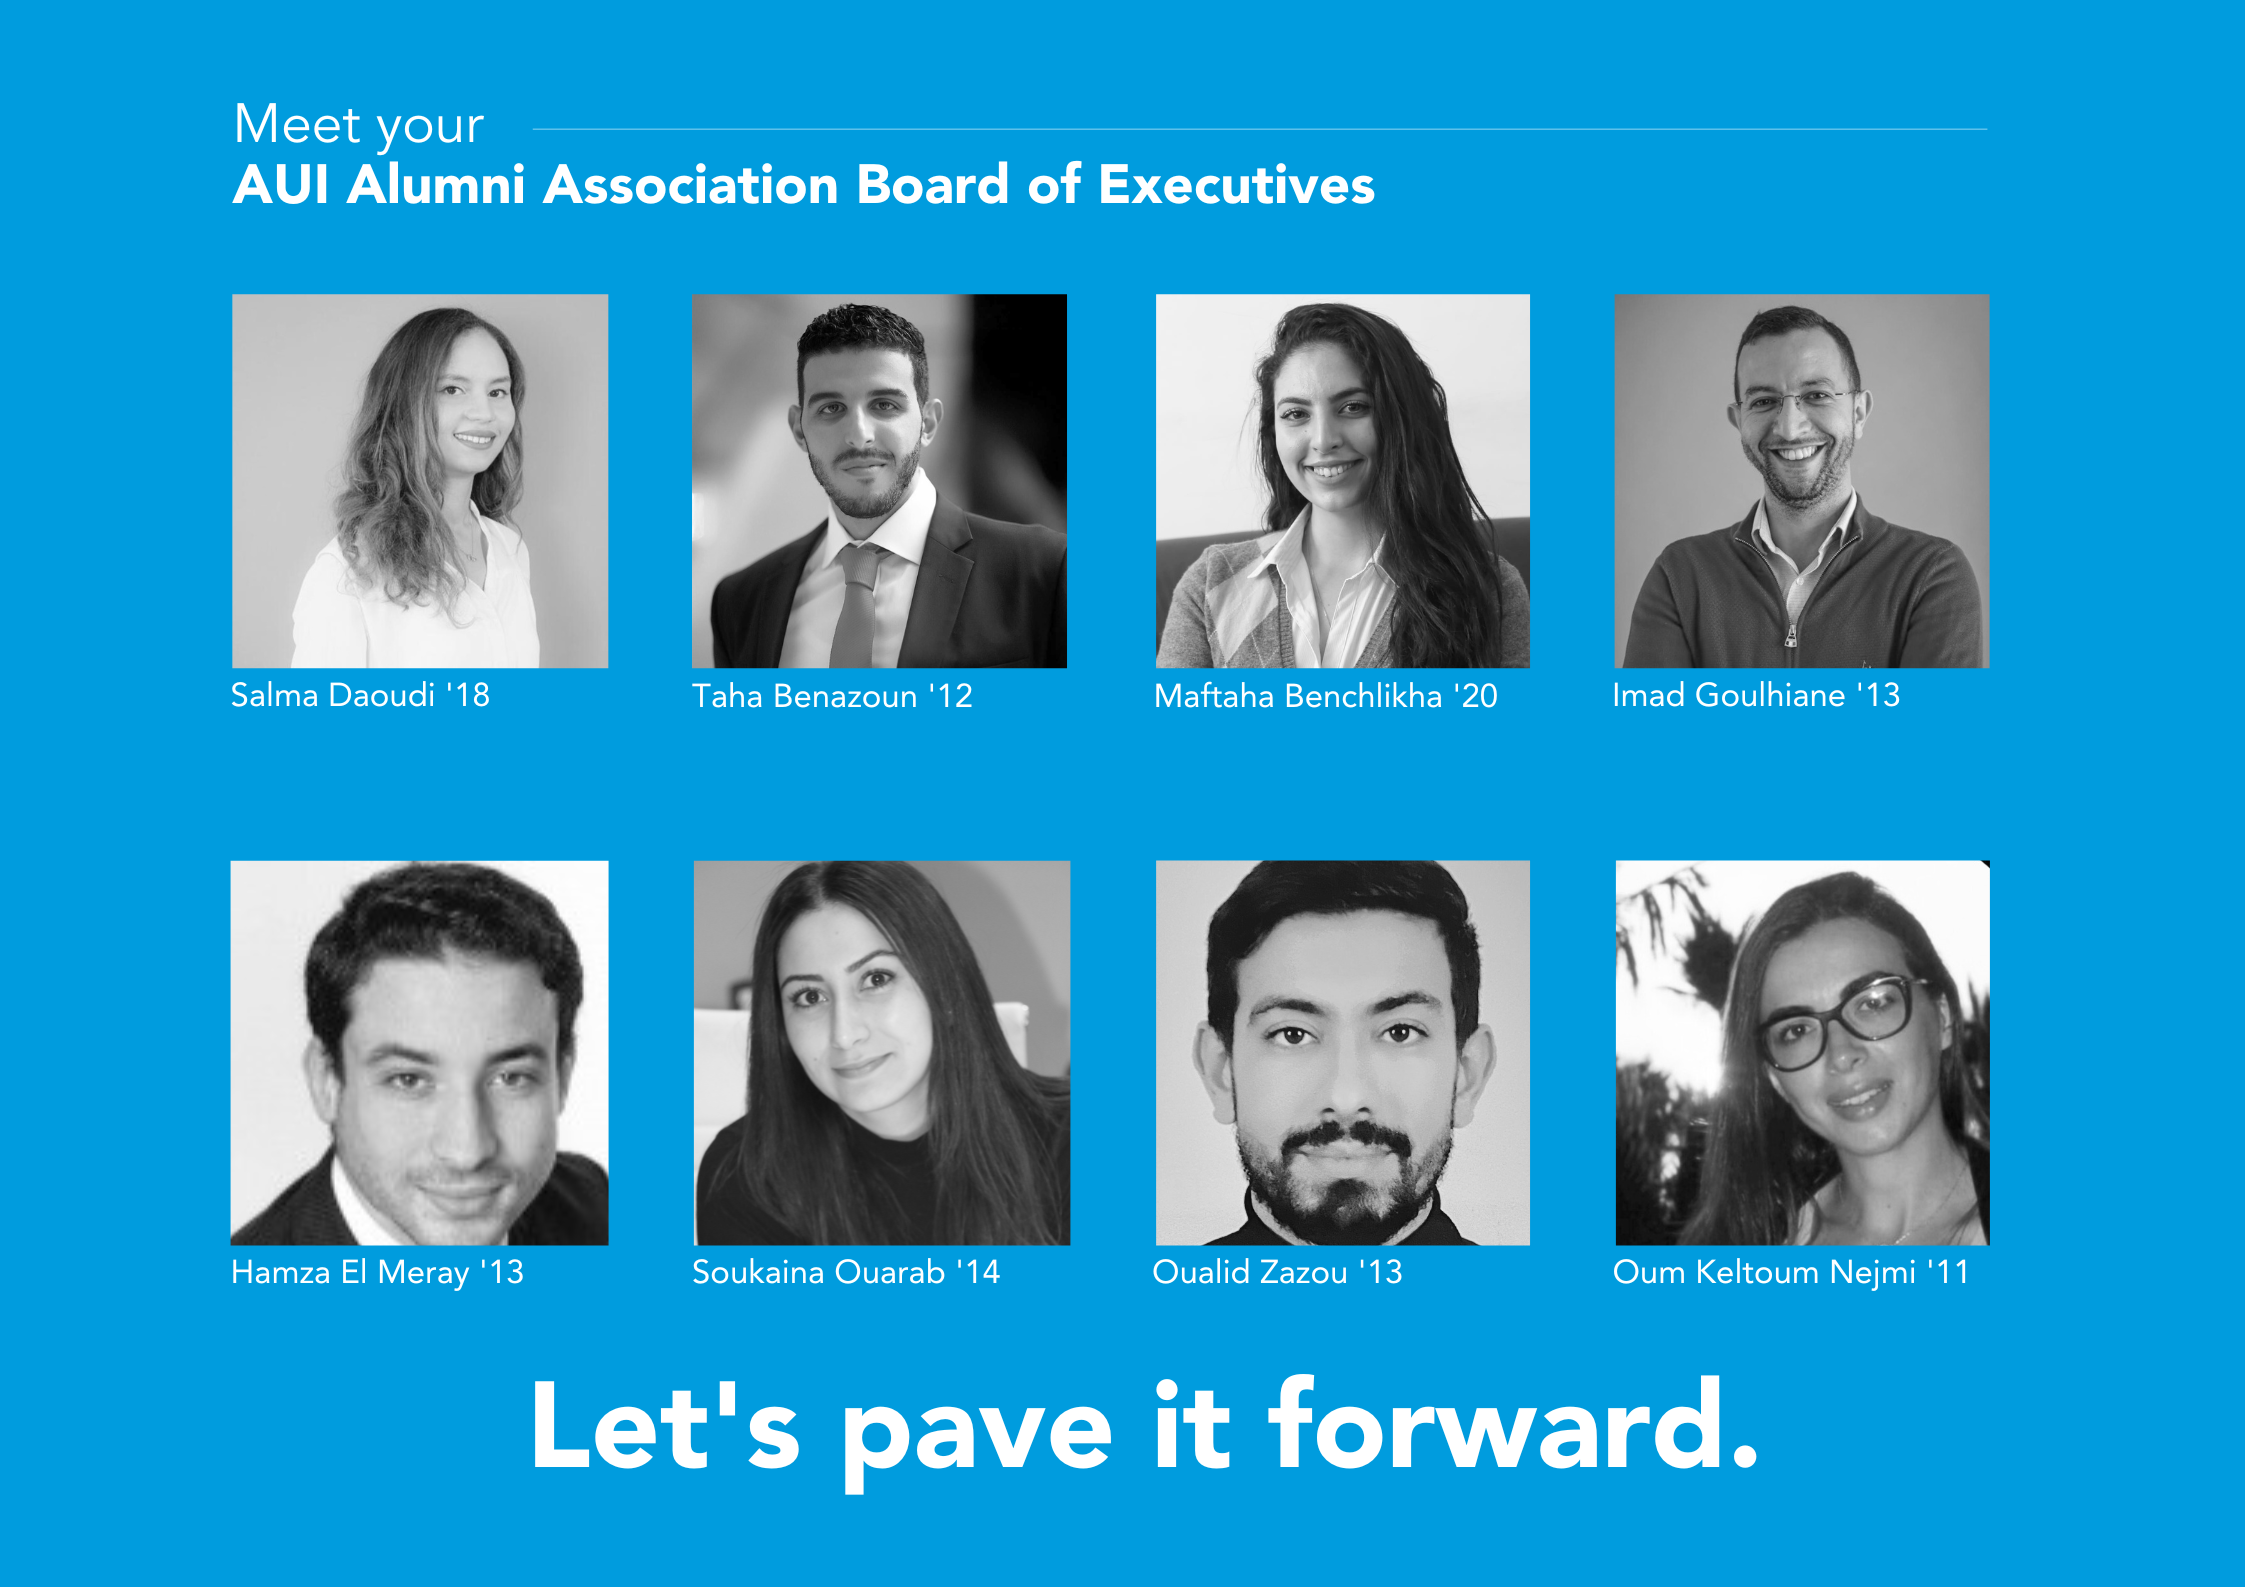 Meet your AUI Alumni Association Board of Executives